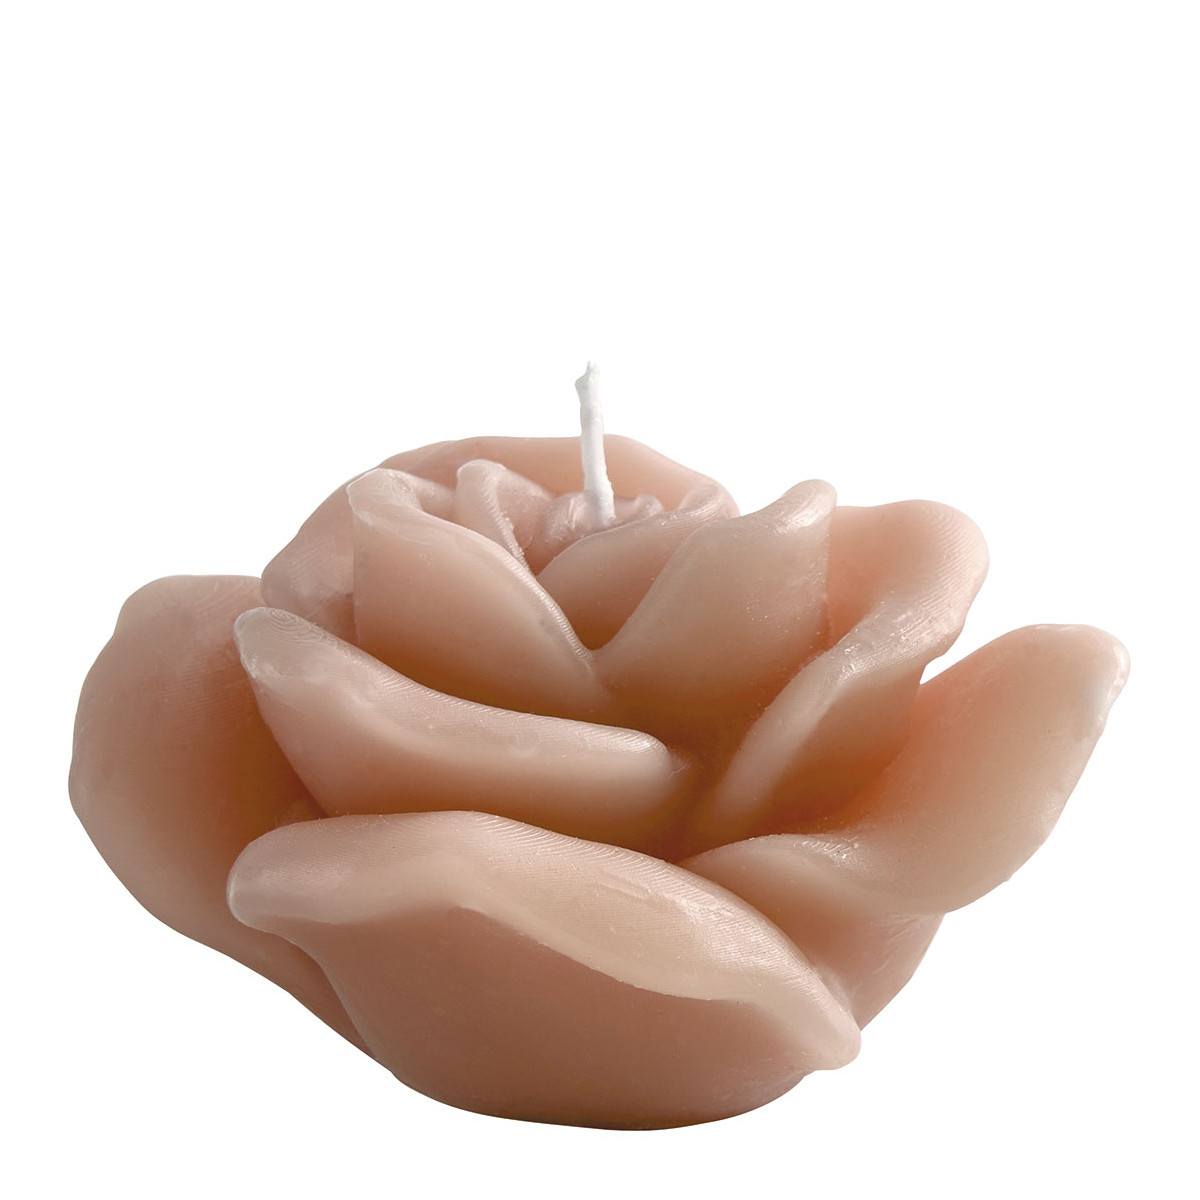 https://media2.mathilde-m.com/20856-thickbox_default/set-de-6-bougies-decoratives-parfumees-rose.jpg